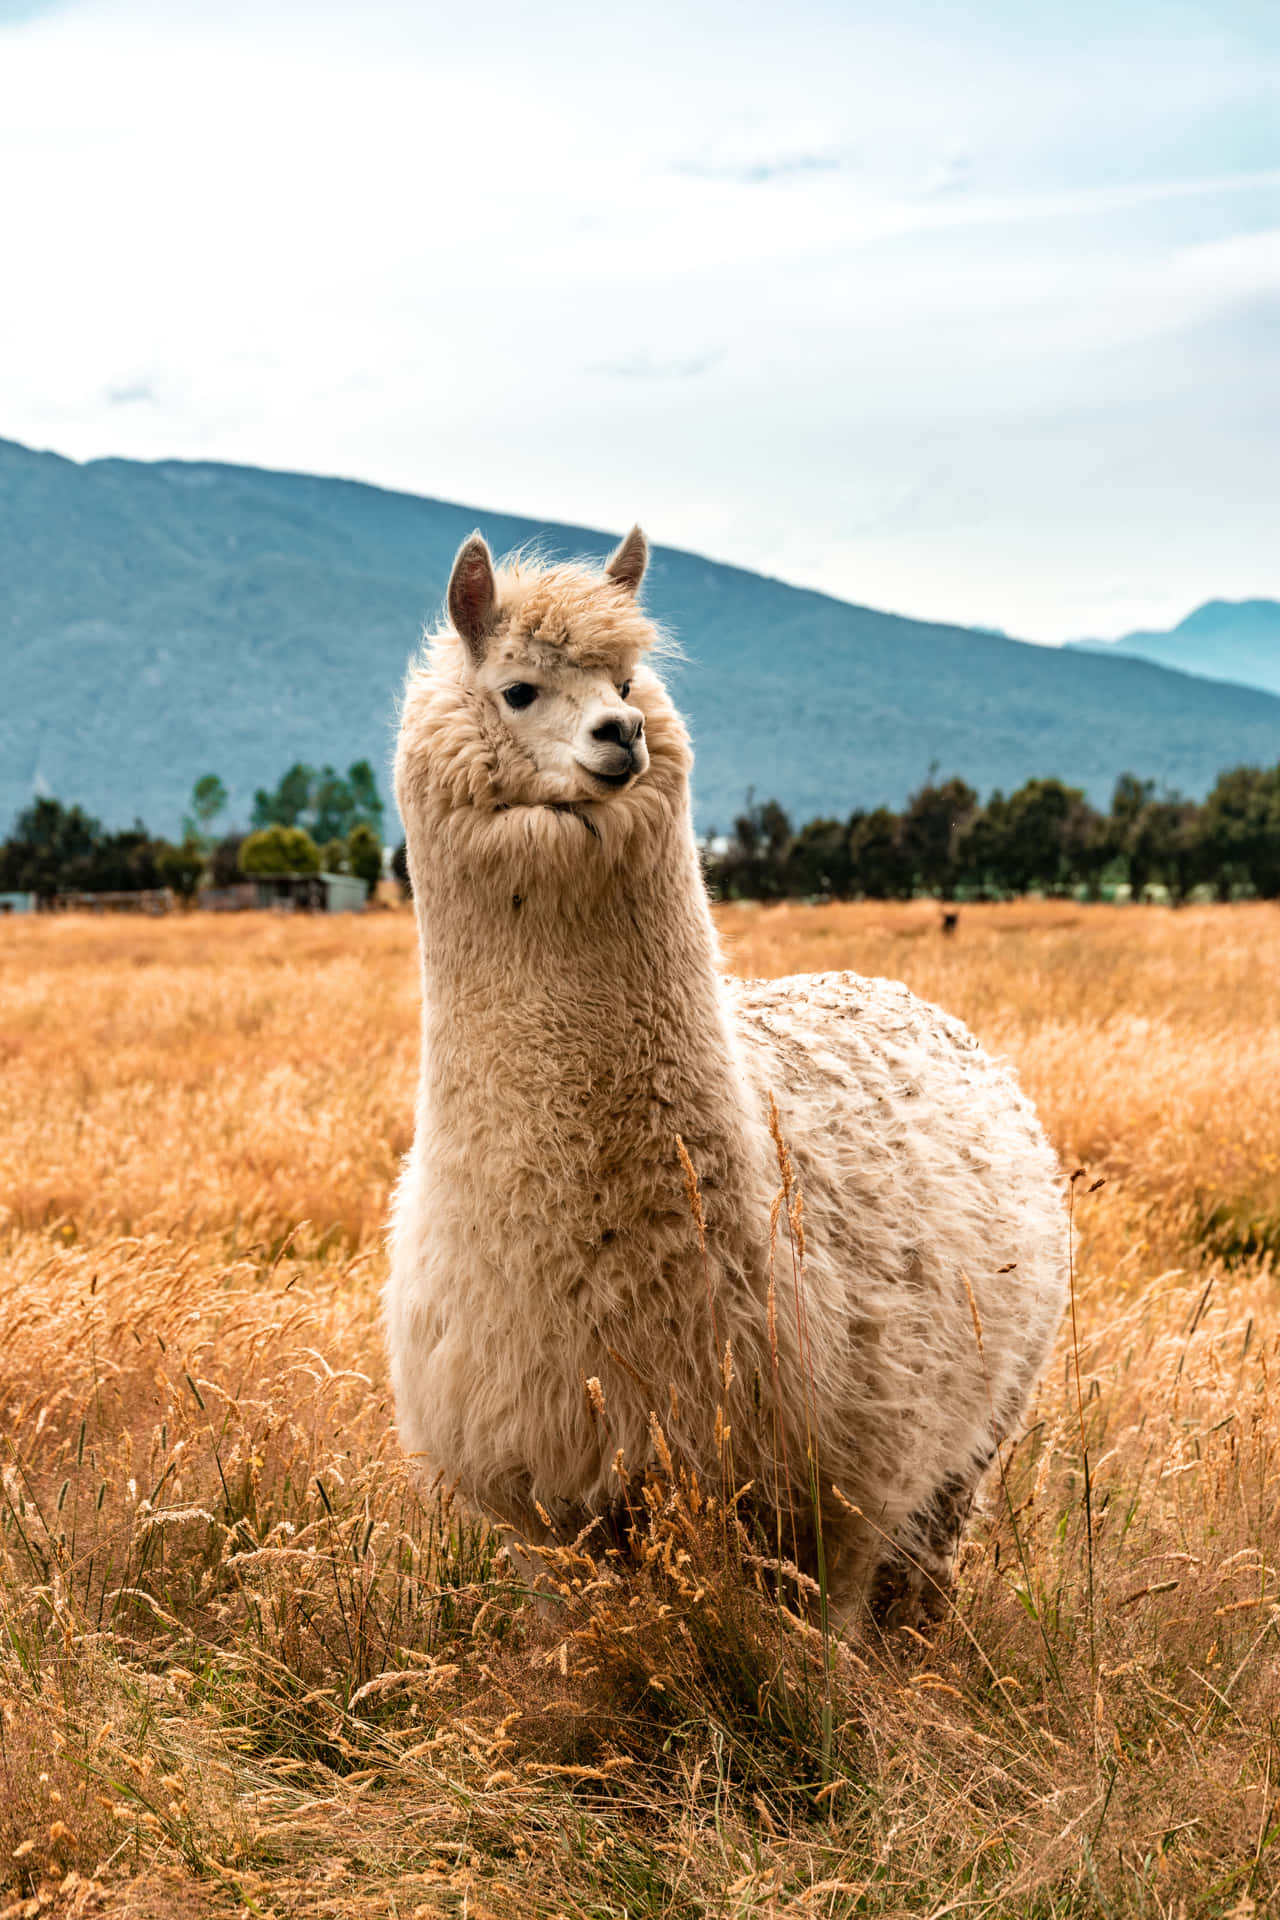 Laughing Llama: Capturing Fun Moments in the Animal Kingdom